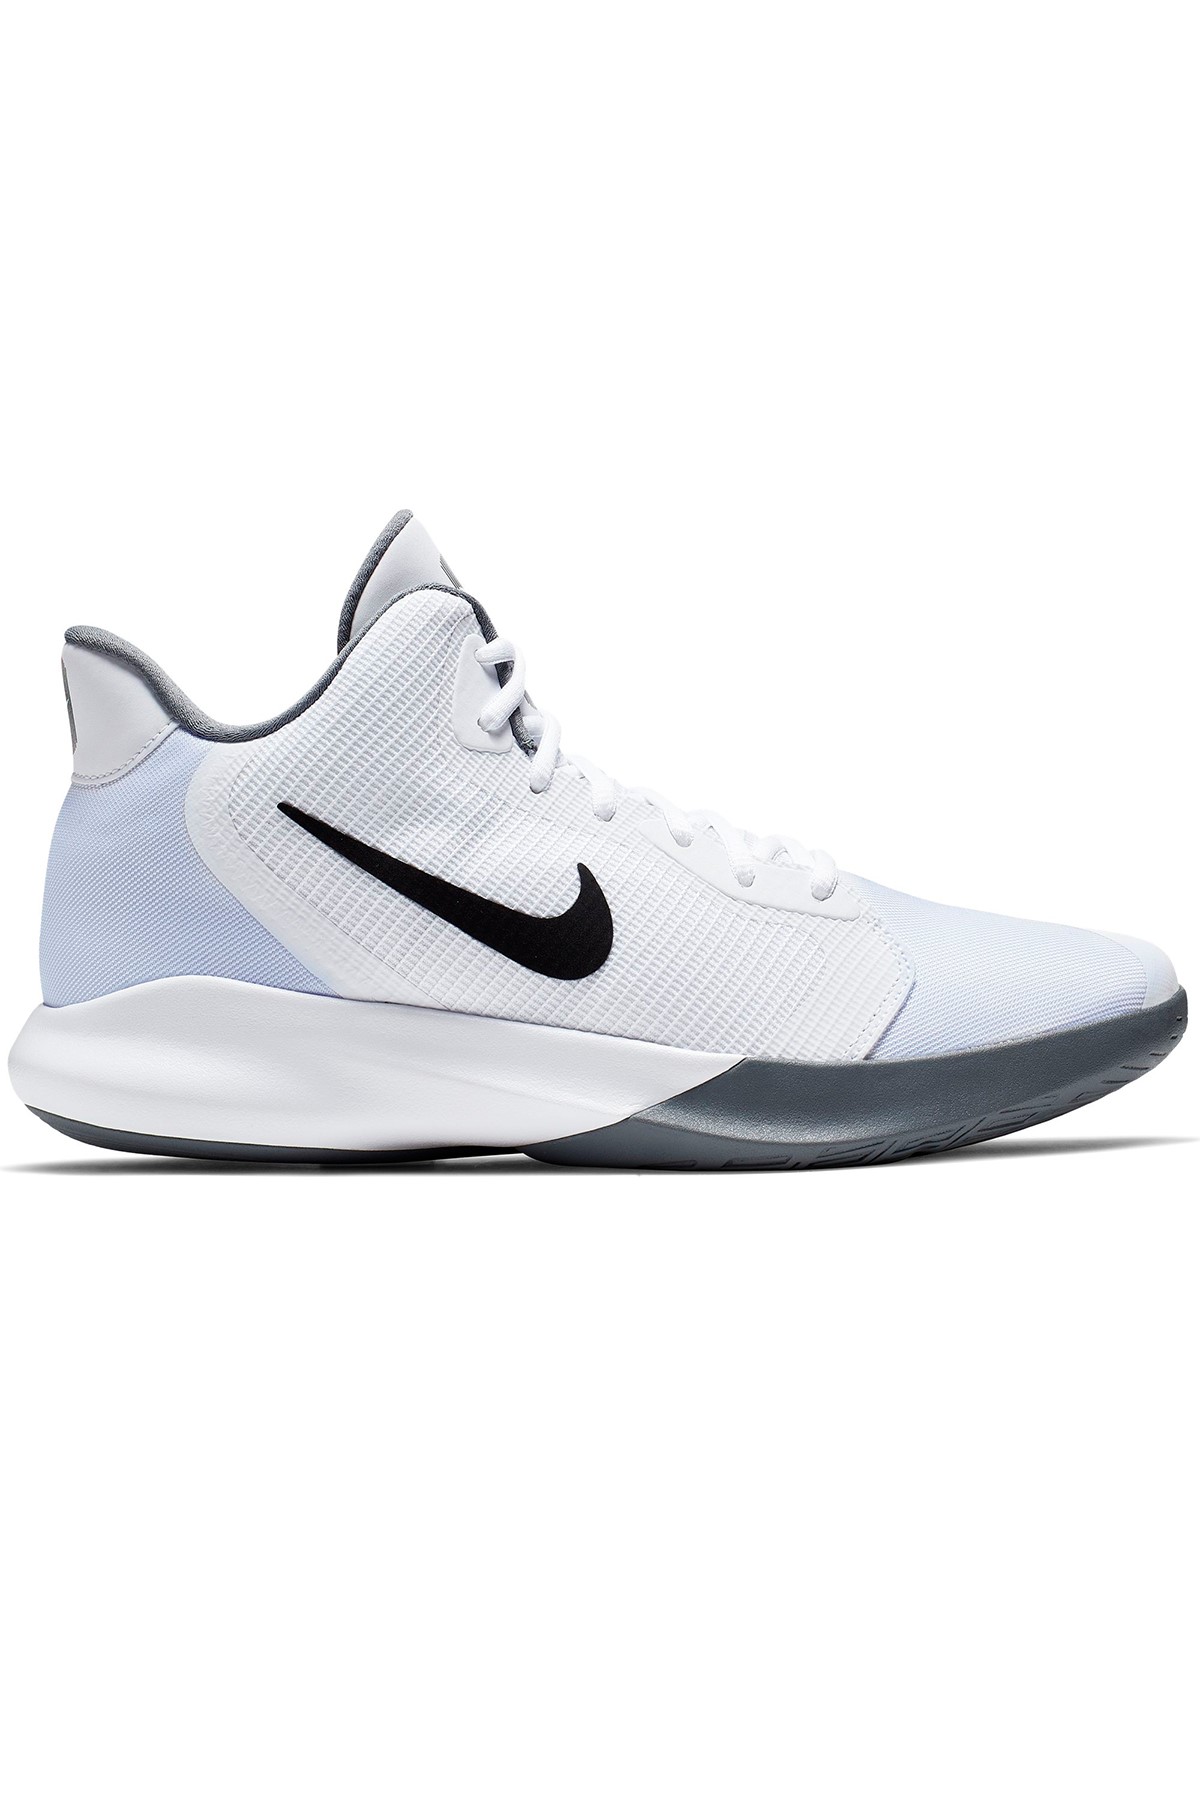 Nike Precision III Basketbol Ayakkabısı AQ7495-100